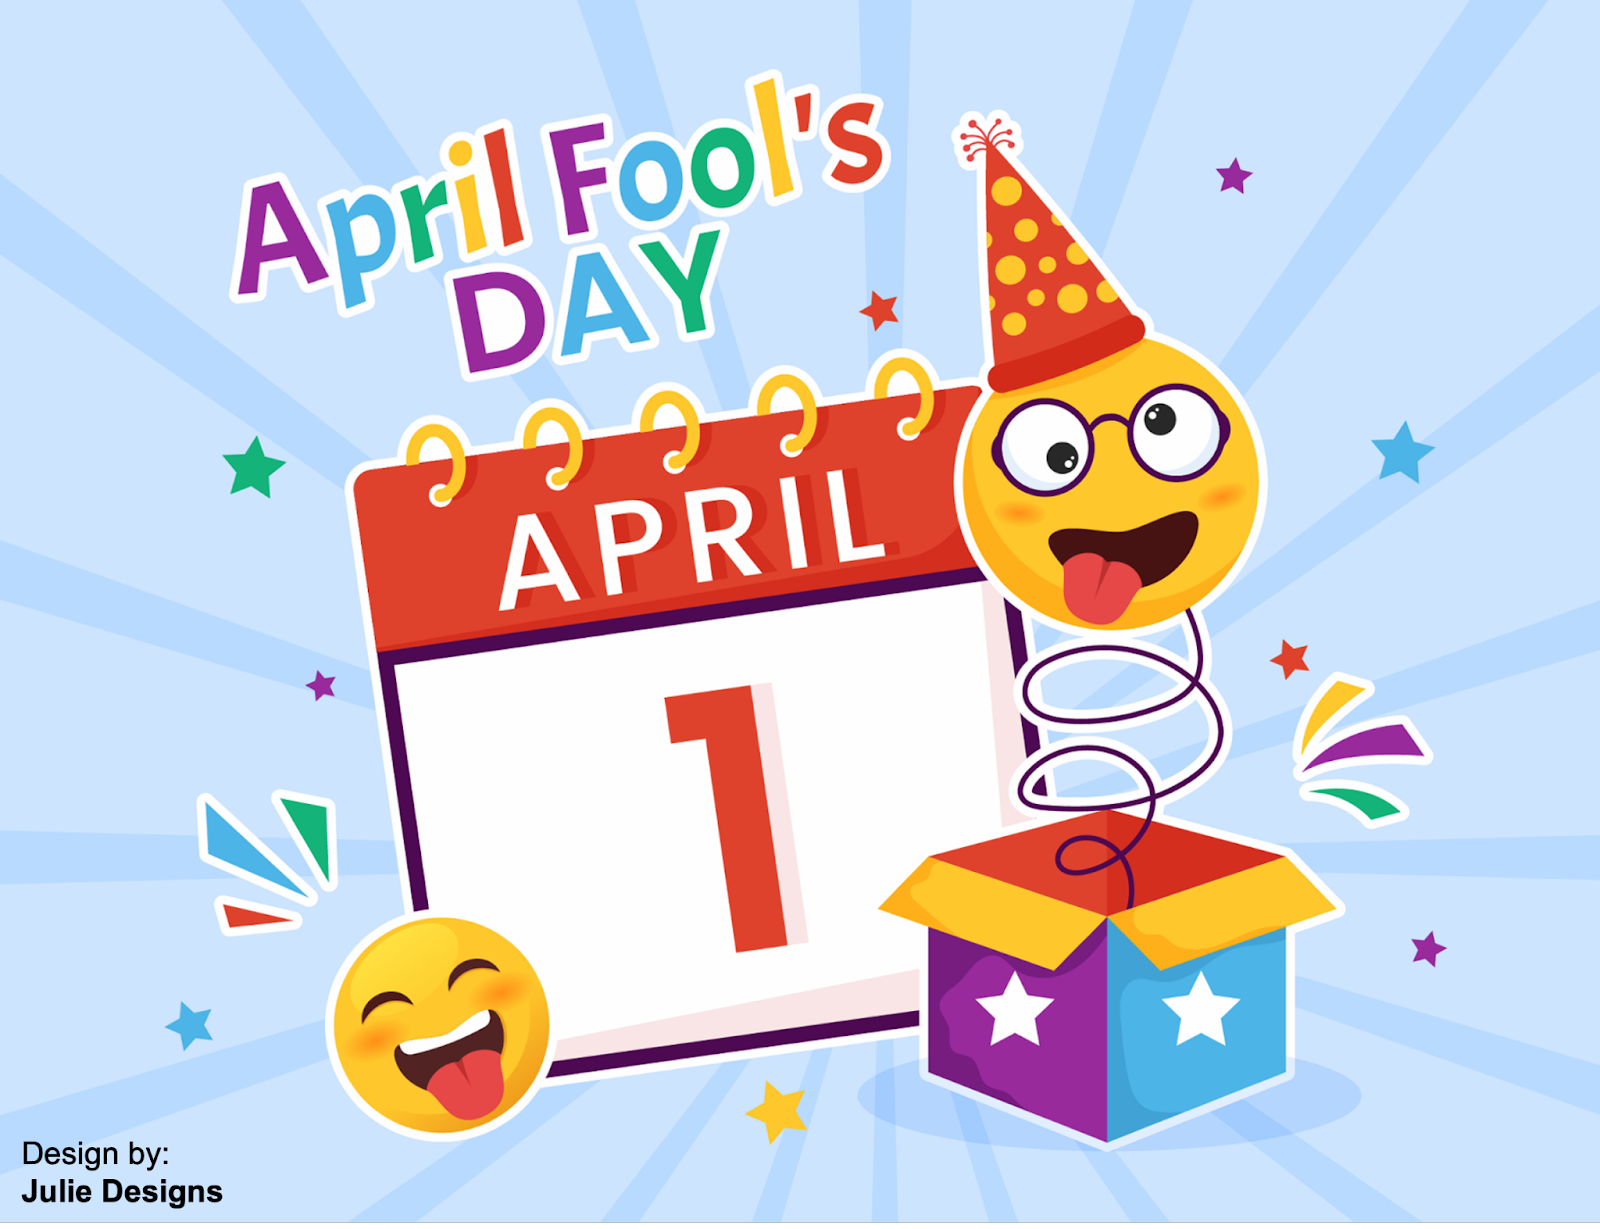 April Fool's Day - April 1